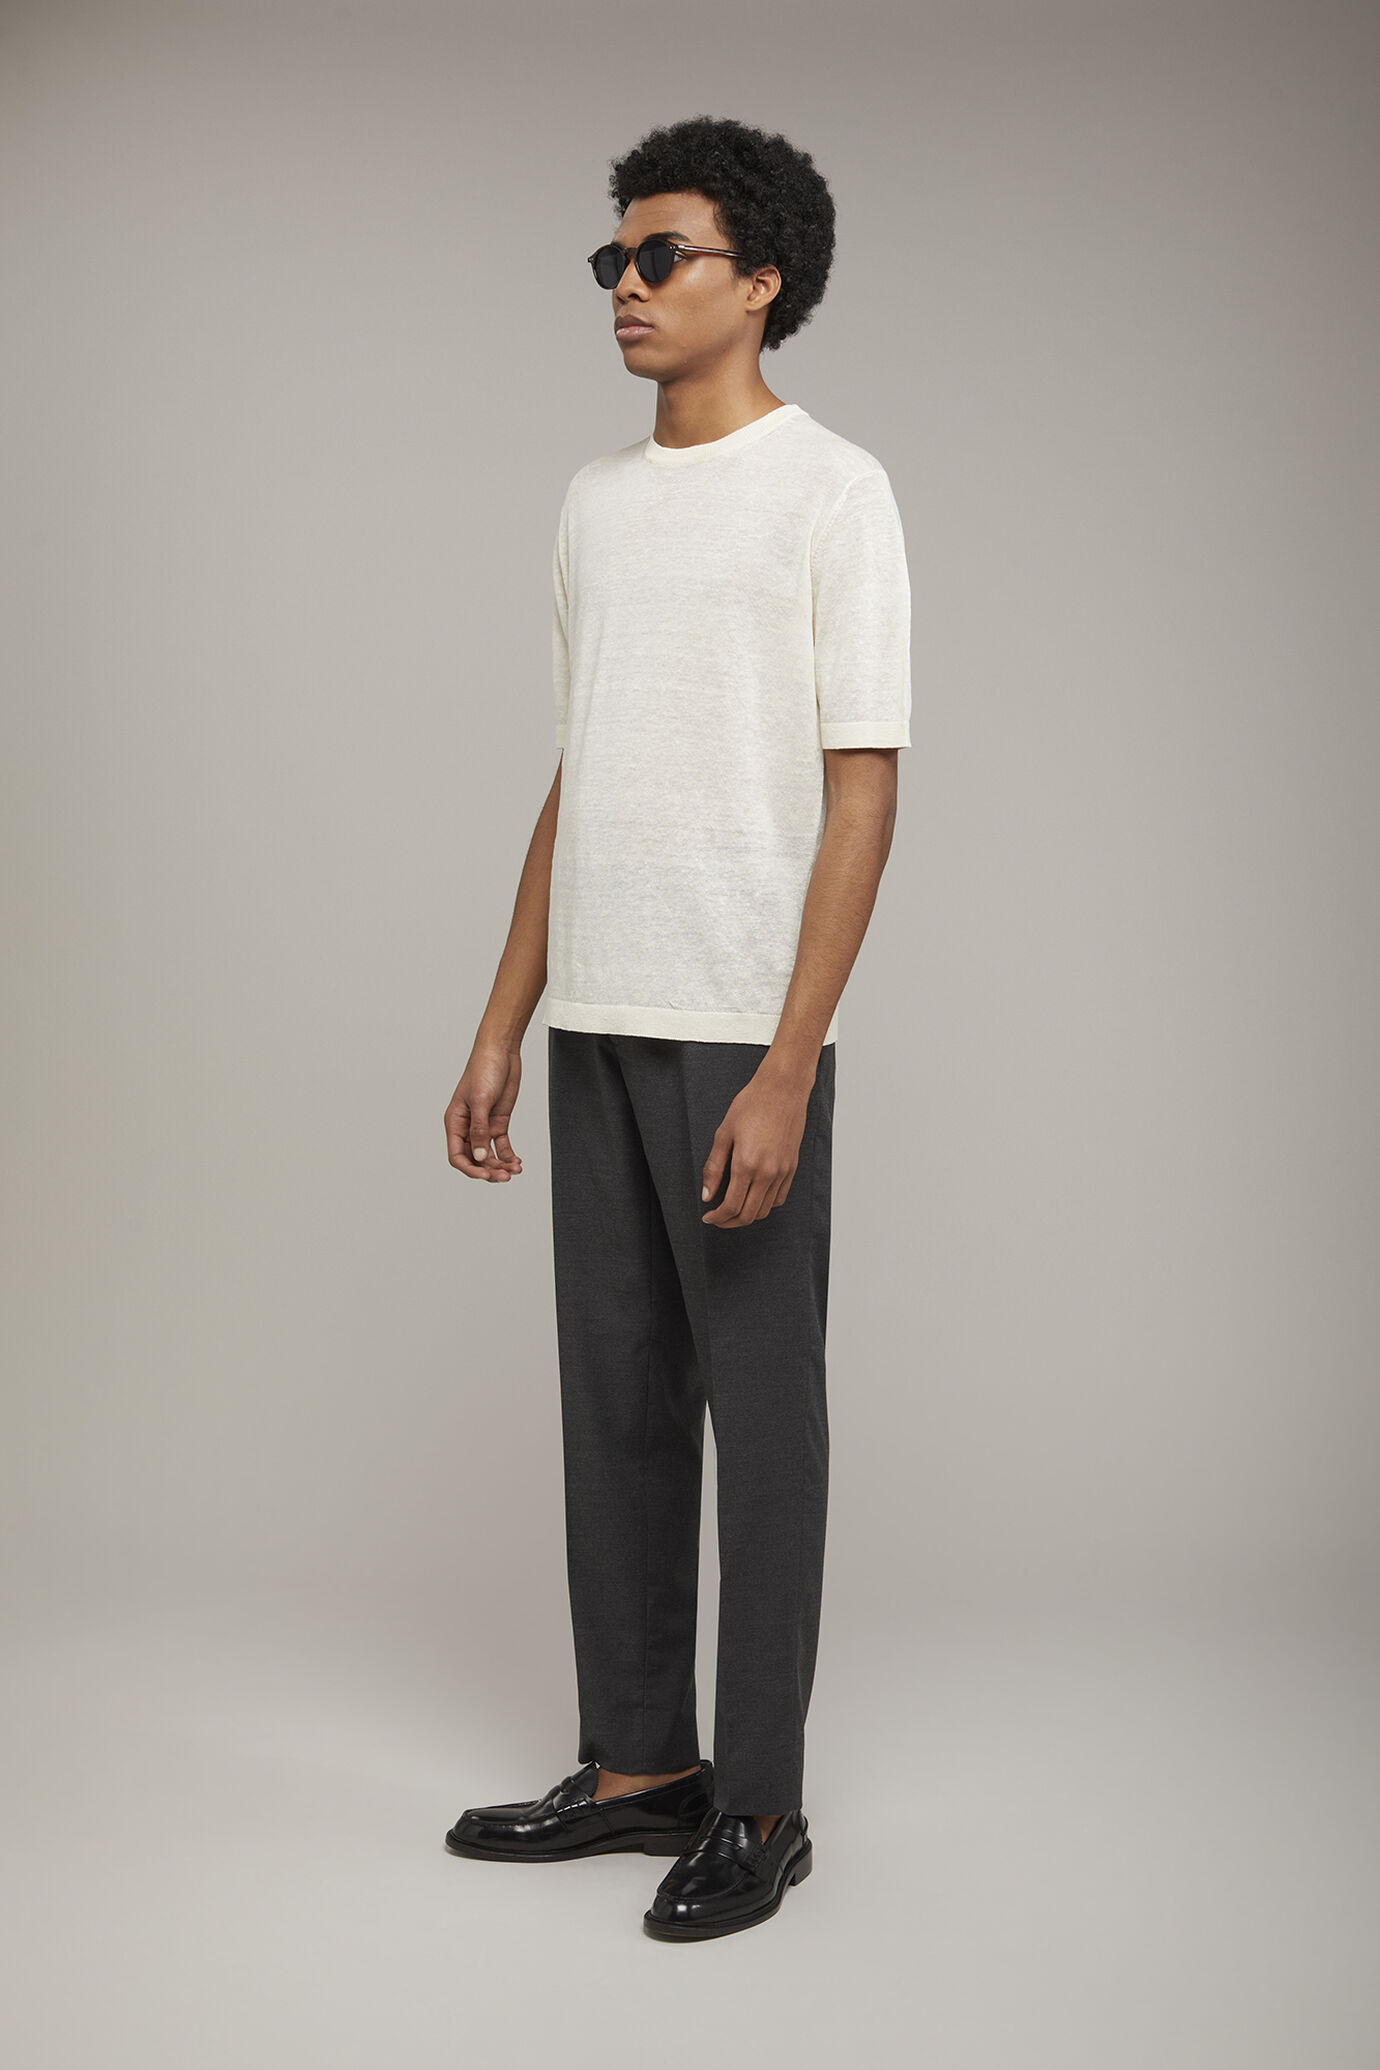 Men's knitted t-shirt 100% linen short-sleeved regular fit image number 1